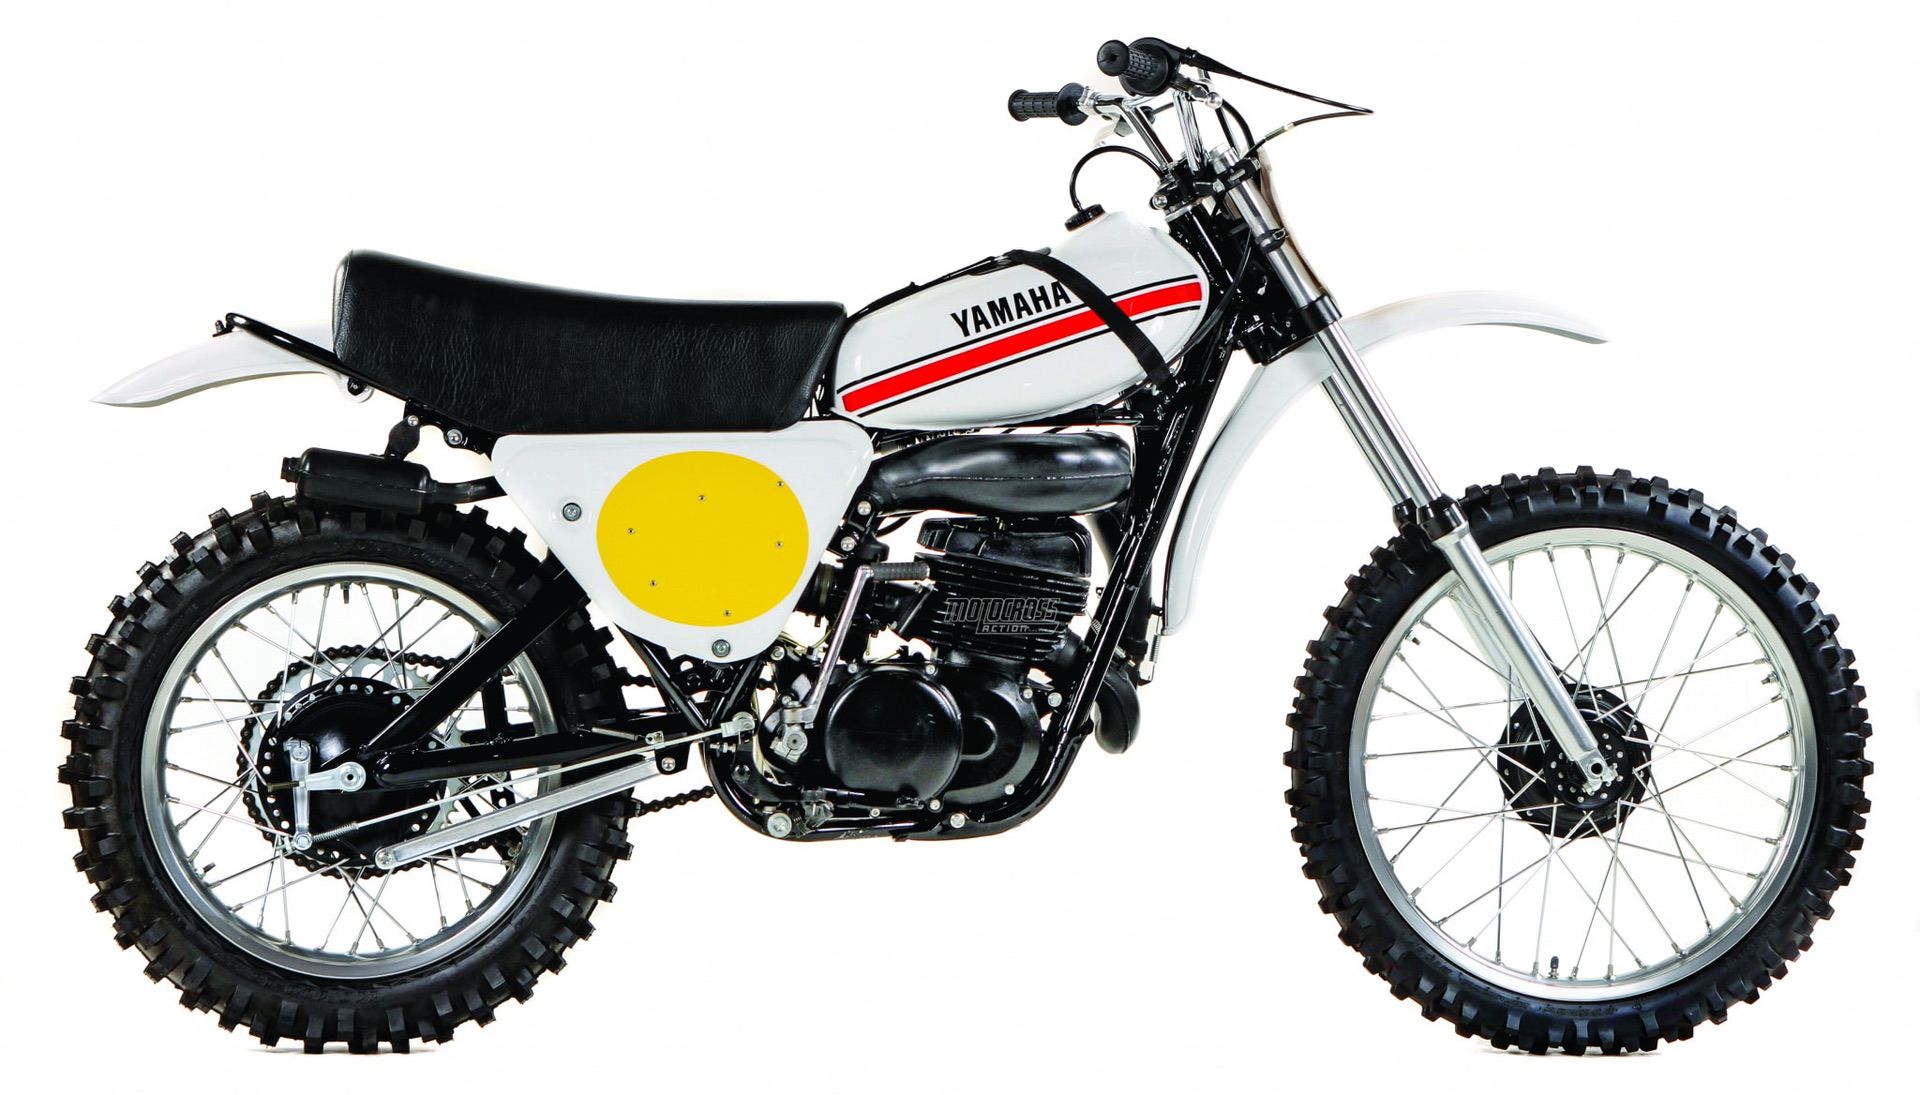 A '74 Yamaha YZ360 motocross bike